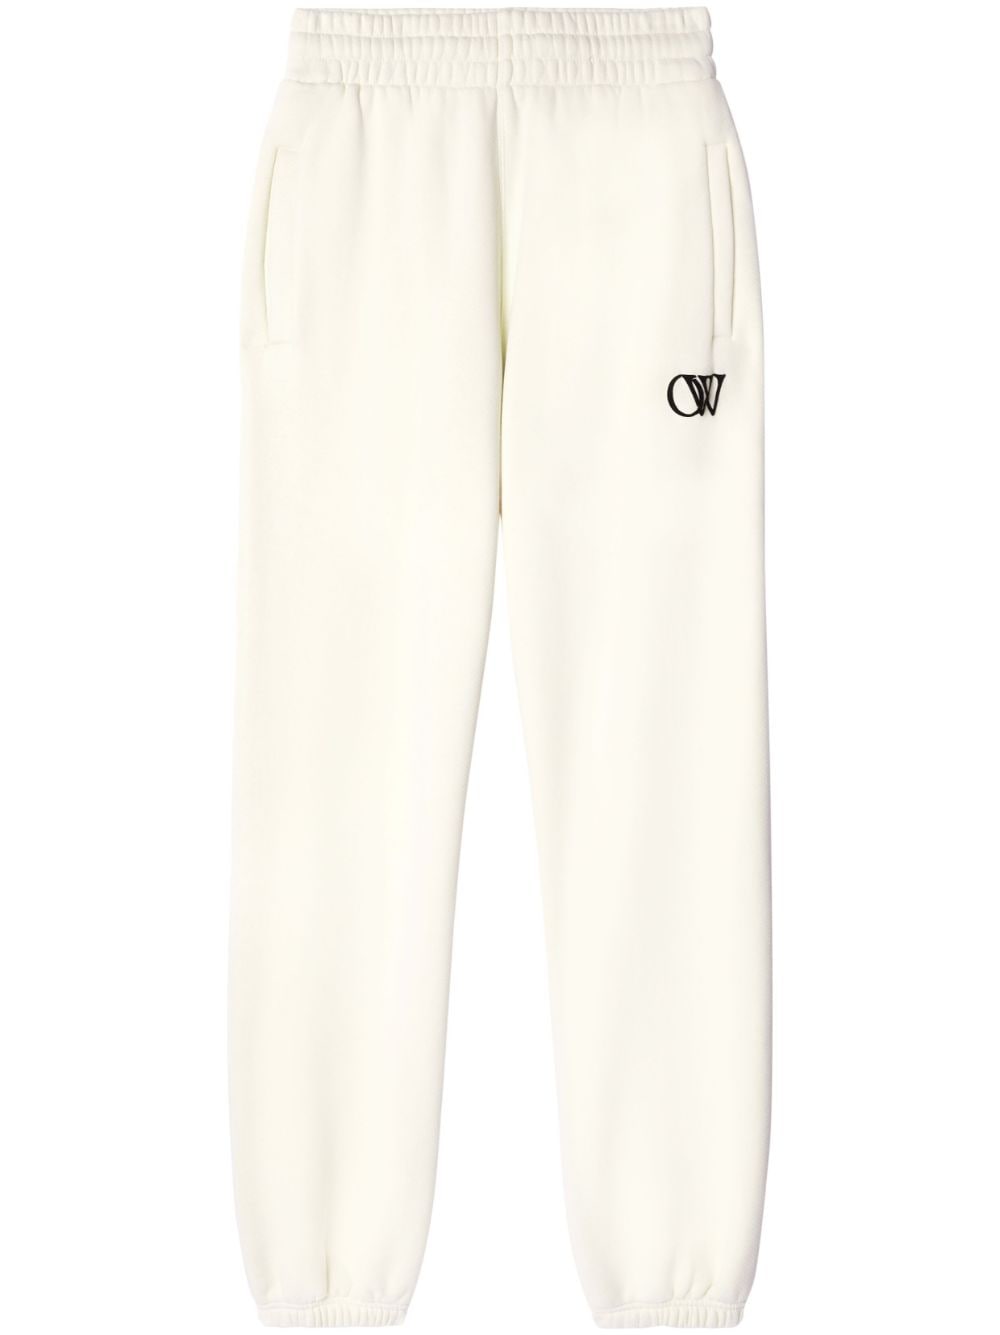 Off-White OW-print cotton track pants